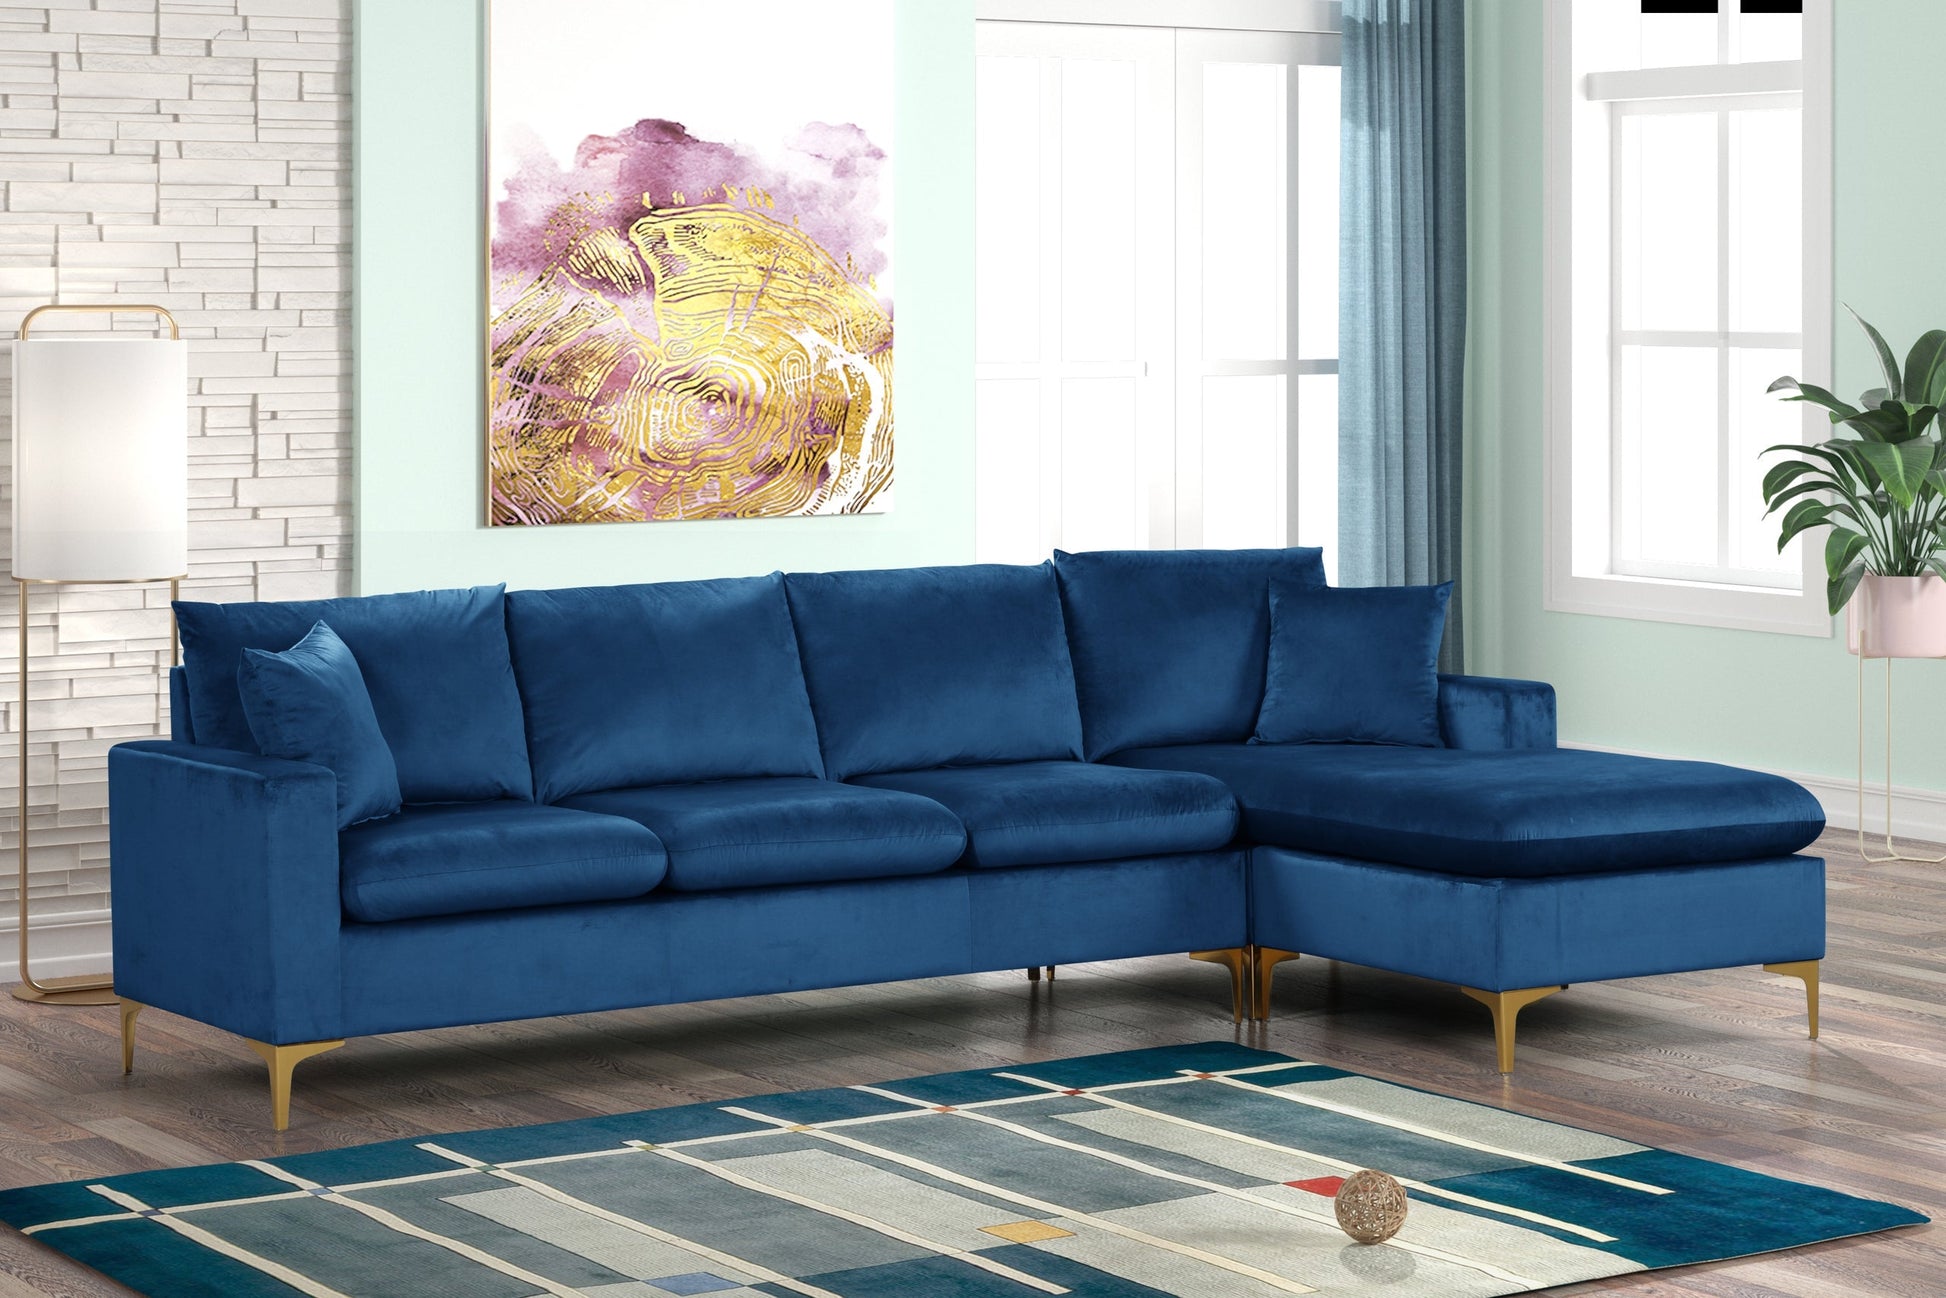 Amber Blue Modern Contemporary Solid Wood Velvet Upholstered Reversible Sectional